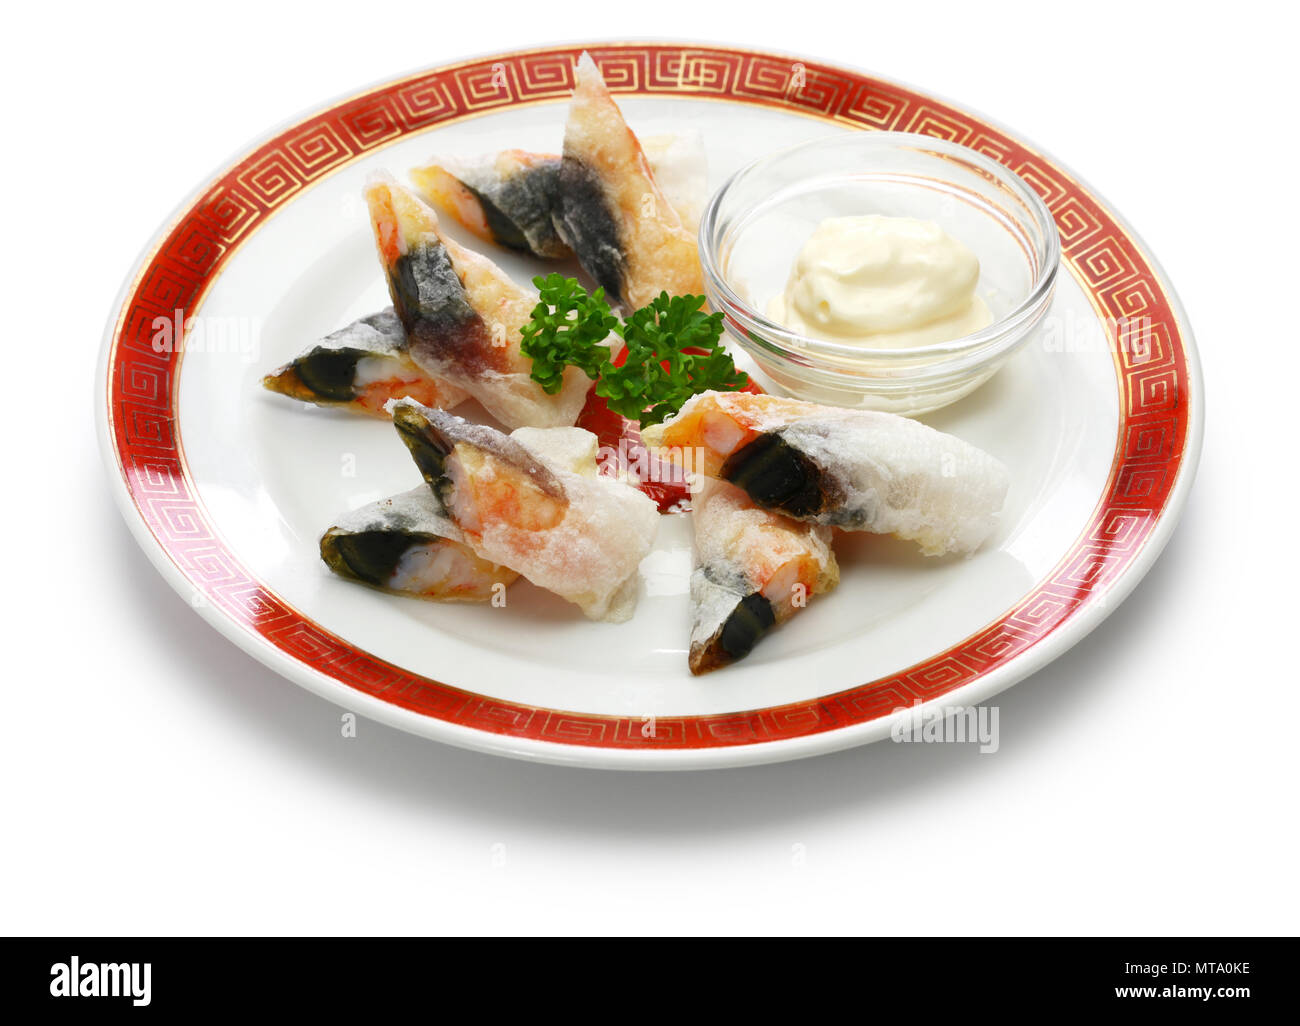 wafer prawn rolls with century egg, chinese dim sum Stock Photo